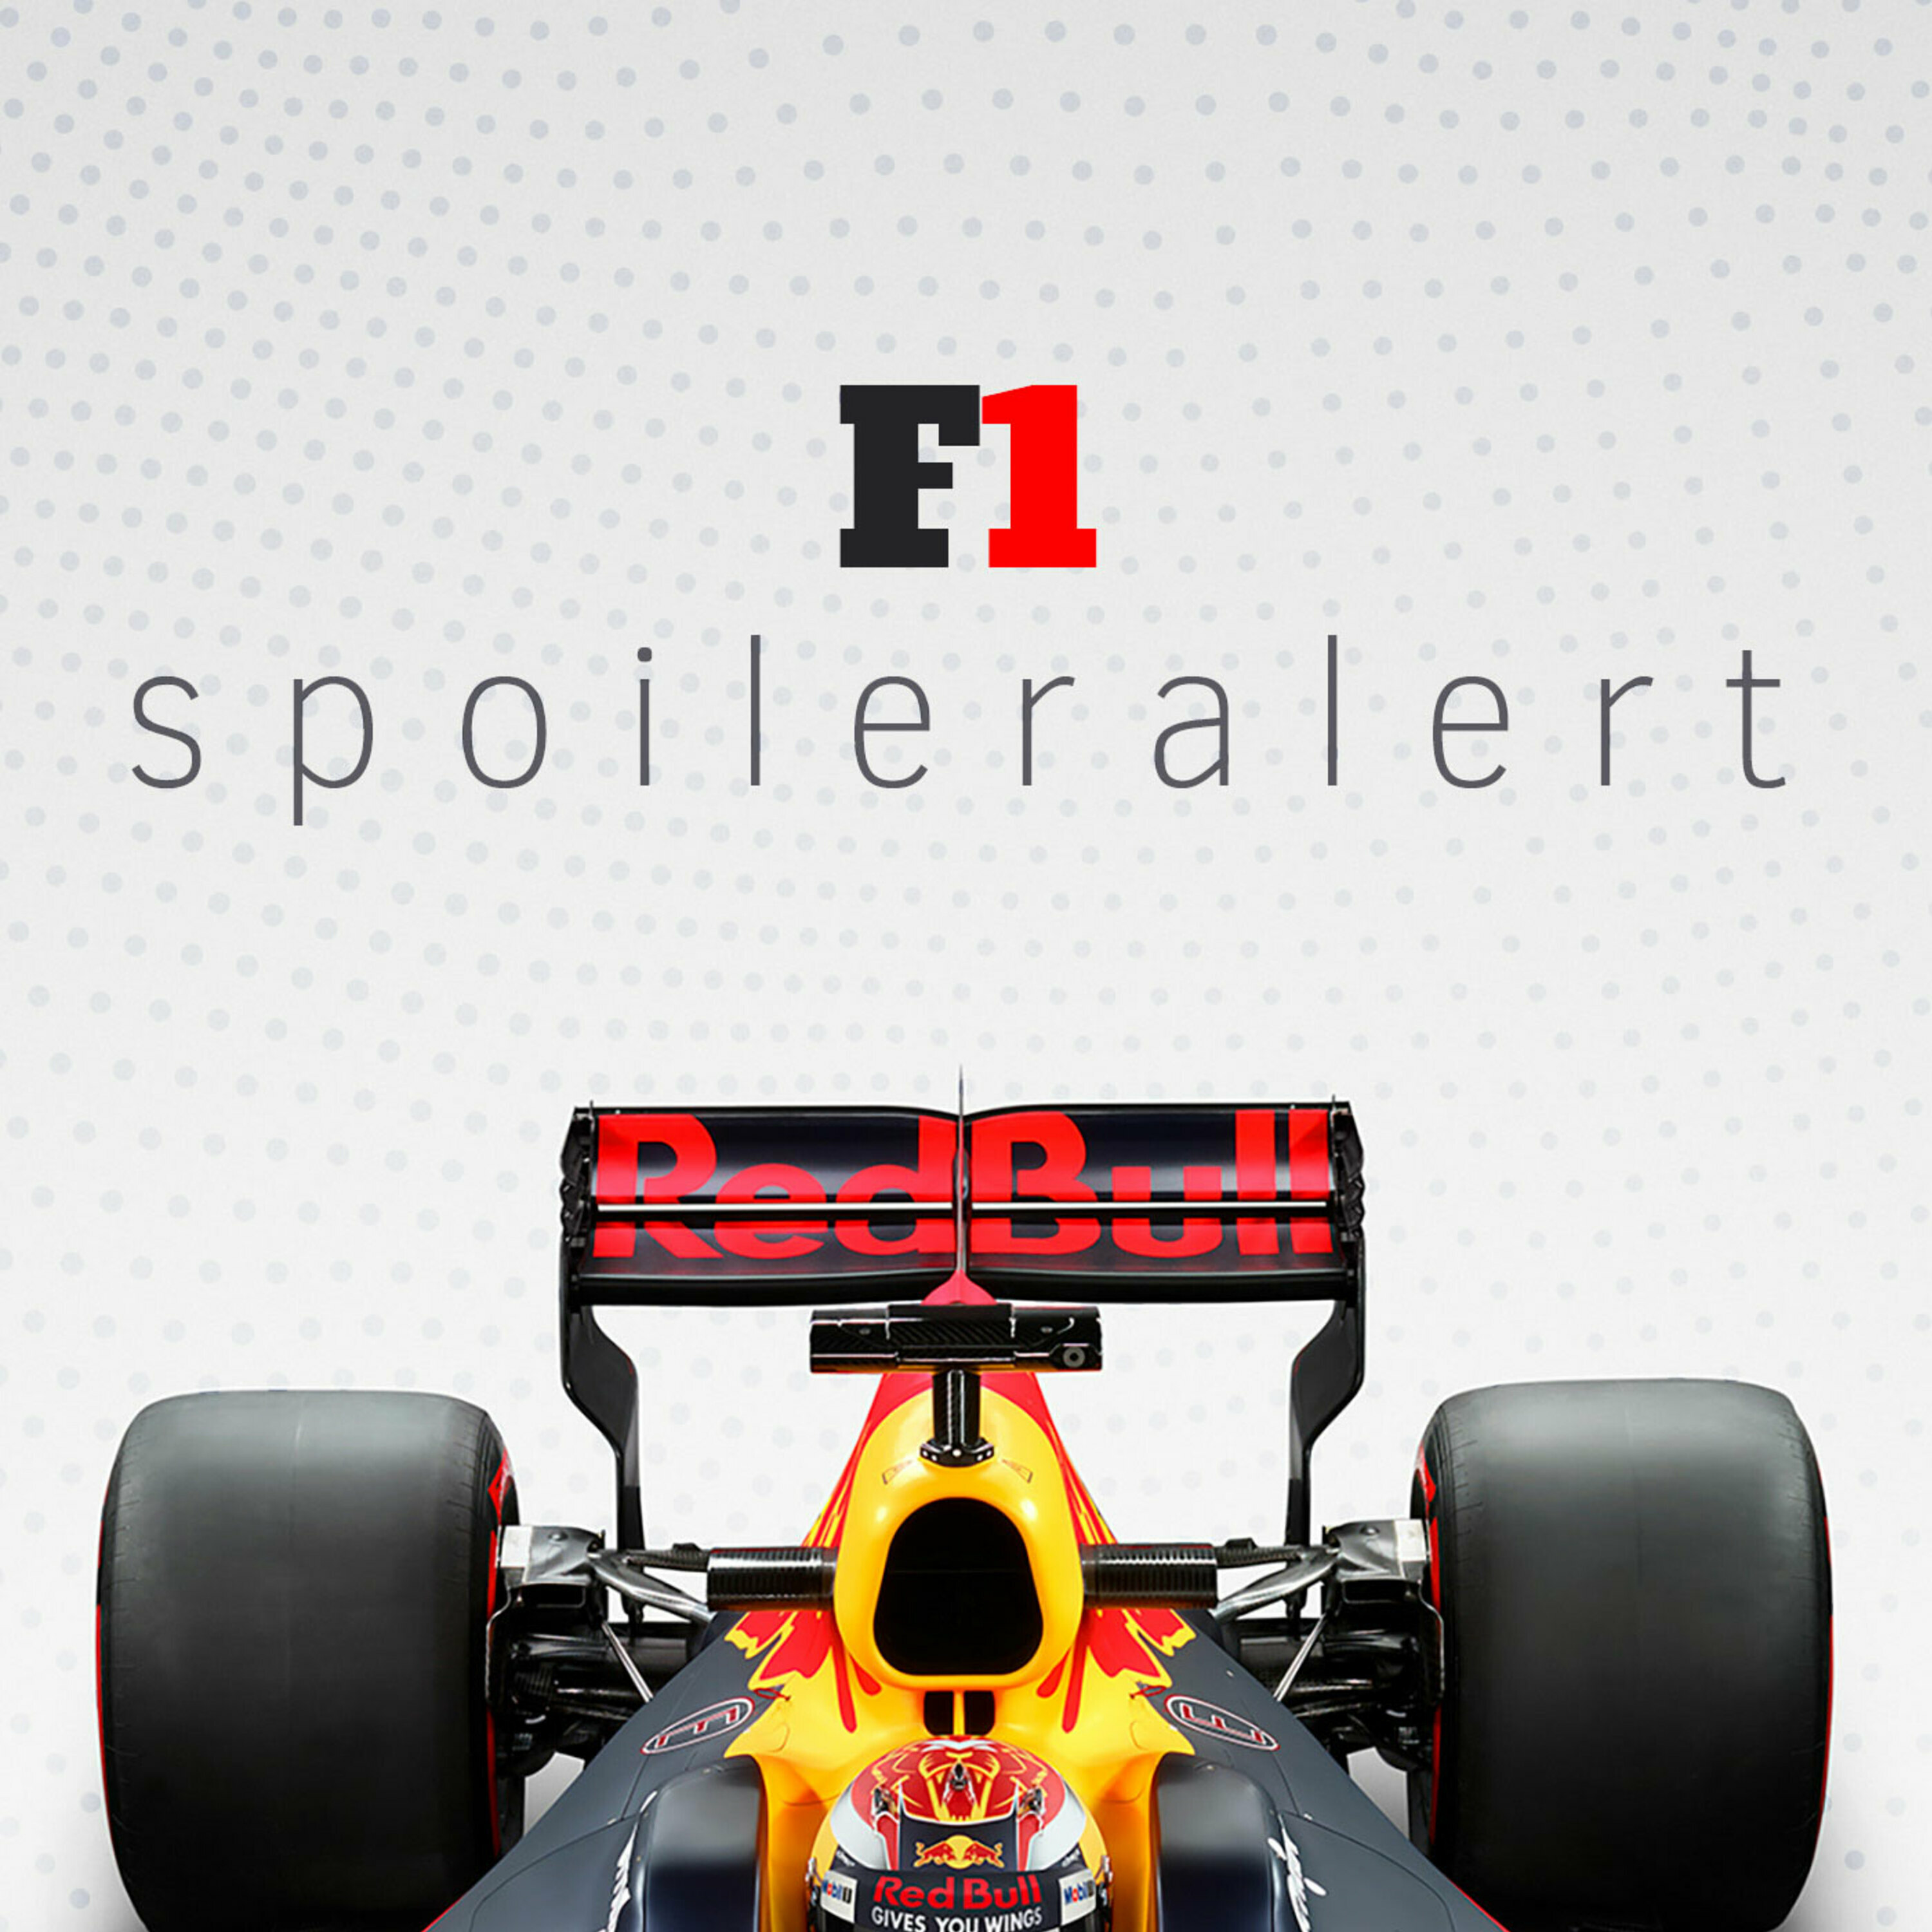 Logo F1 Spoiler Alert